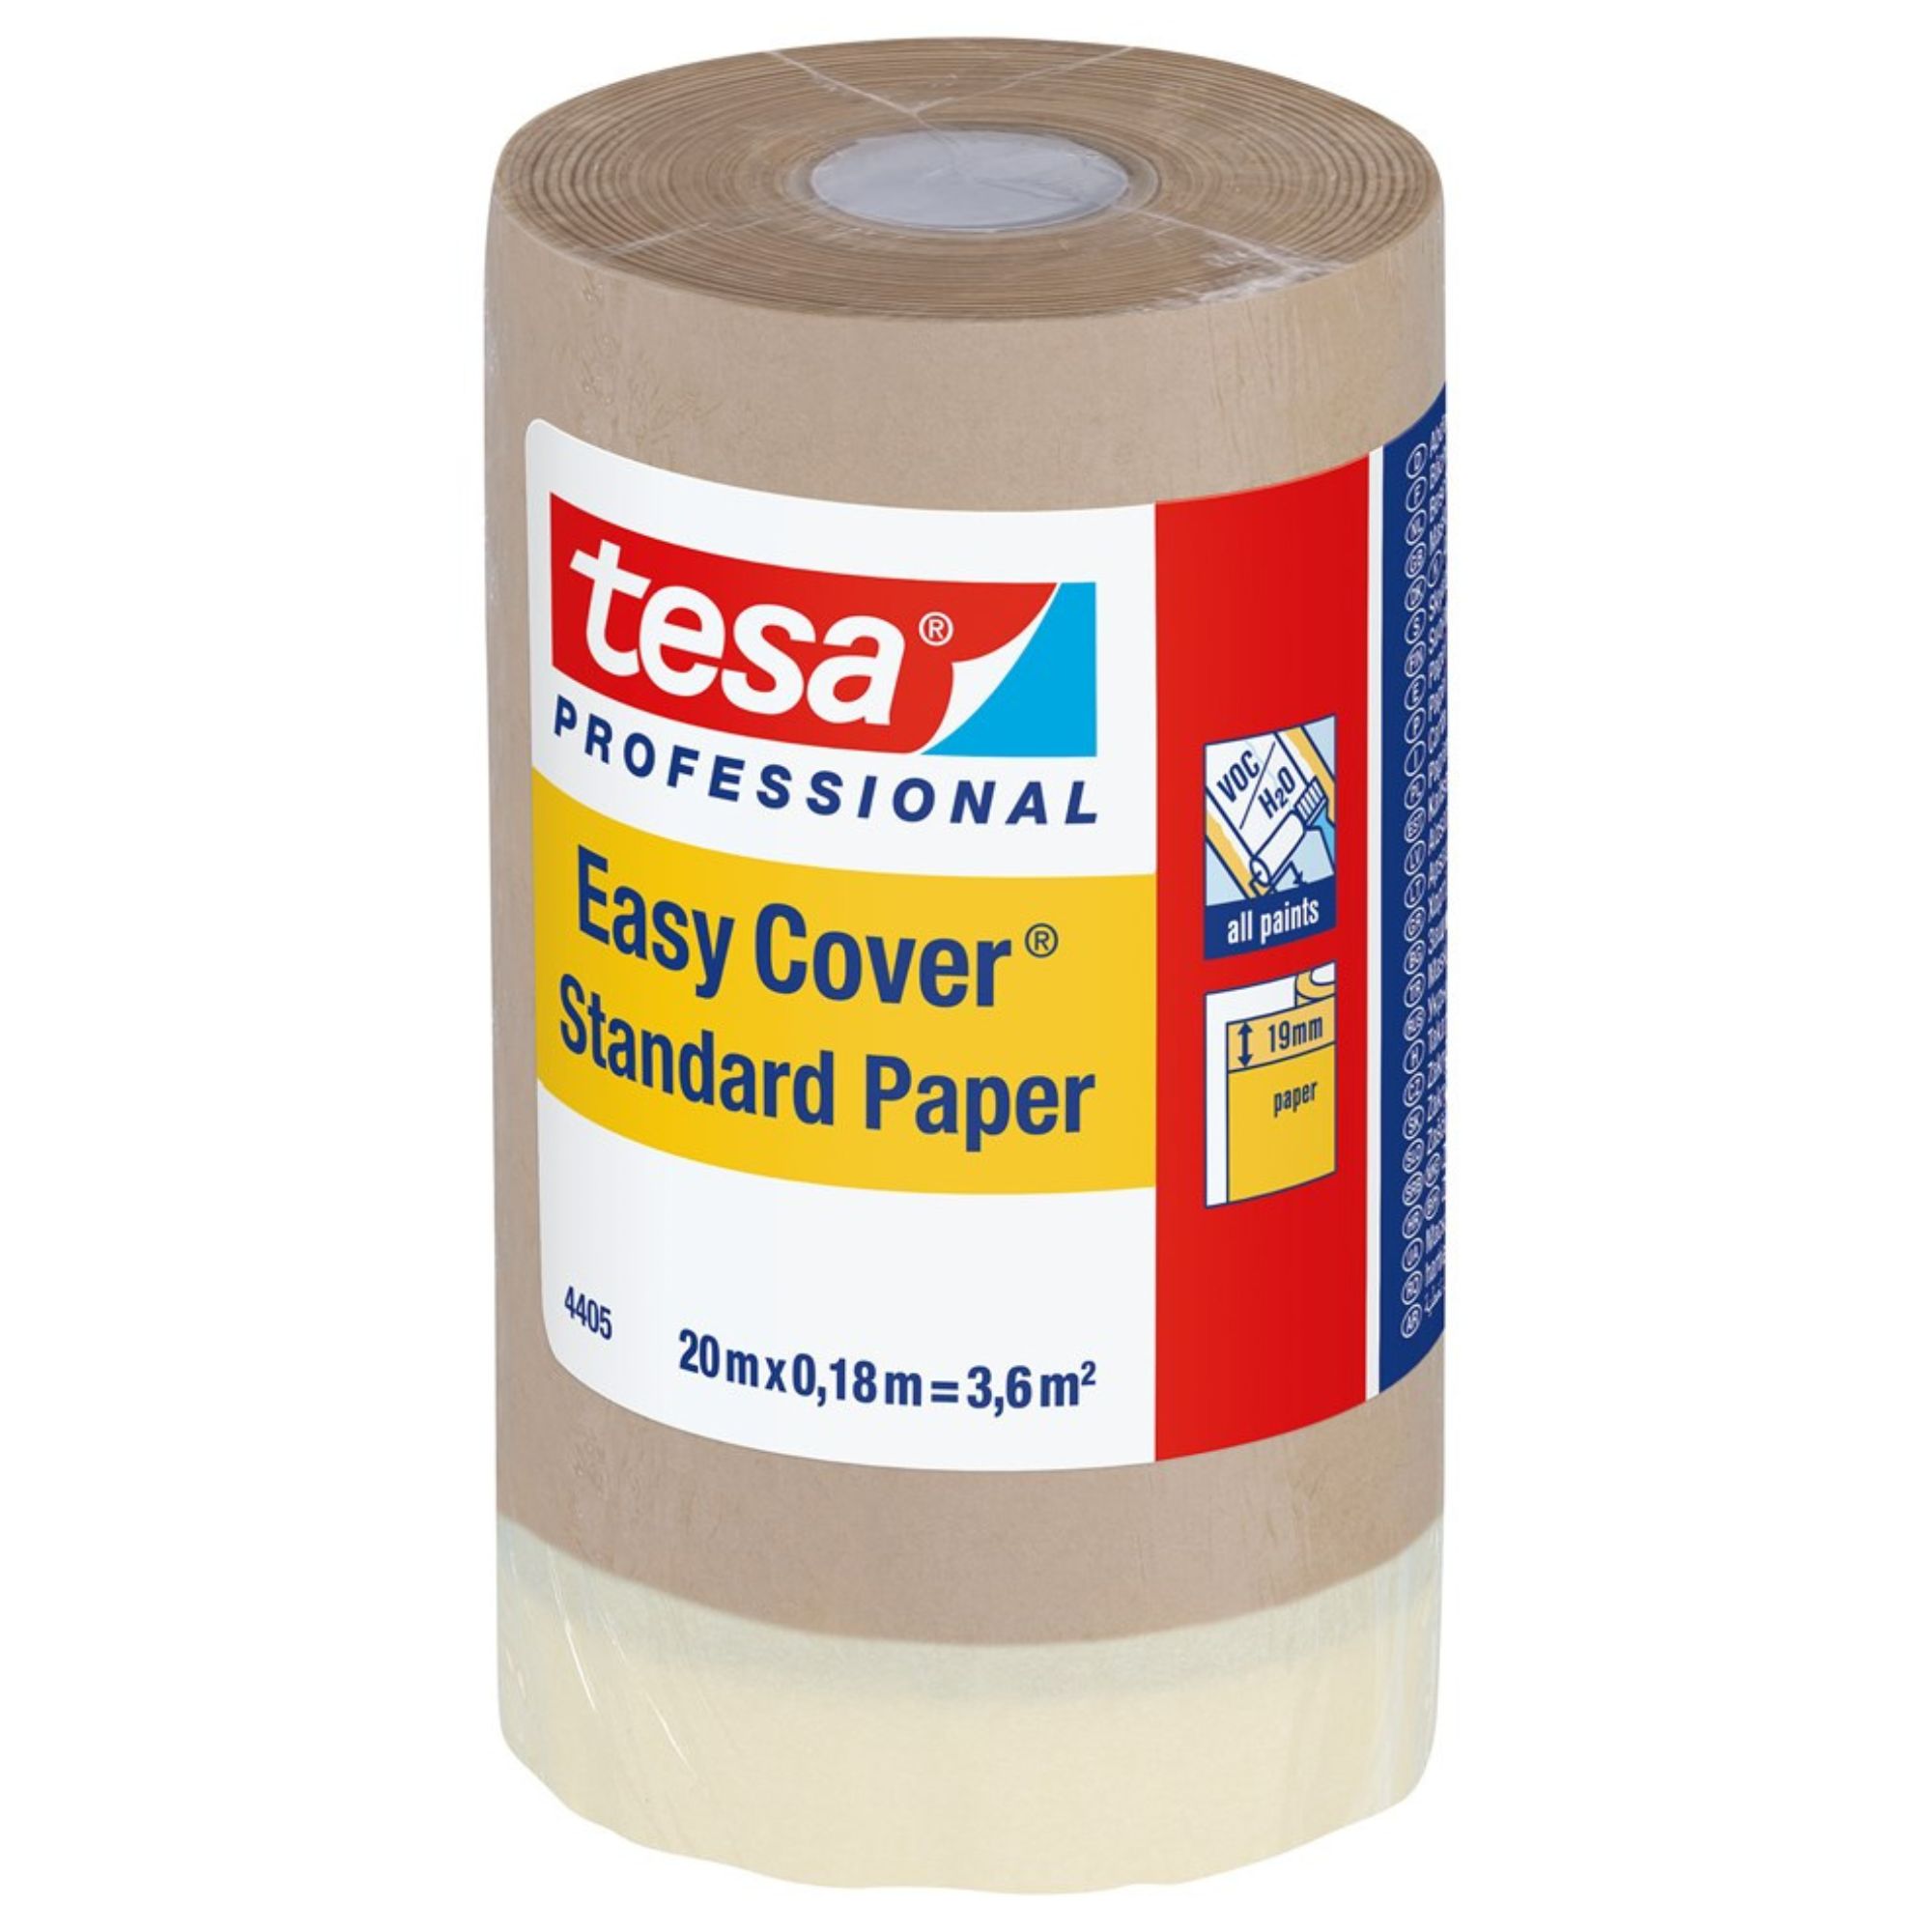 Easy cover paper 20 x 180mm transparente Tesa